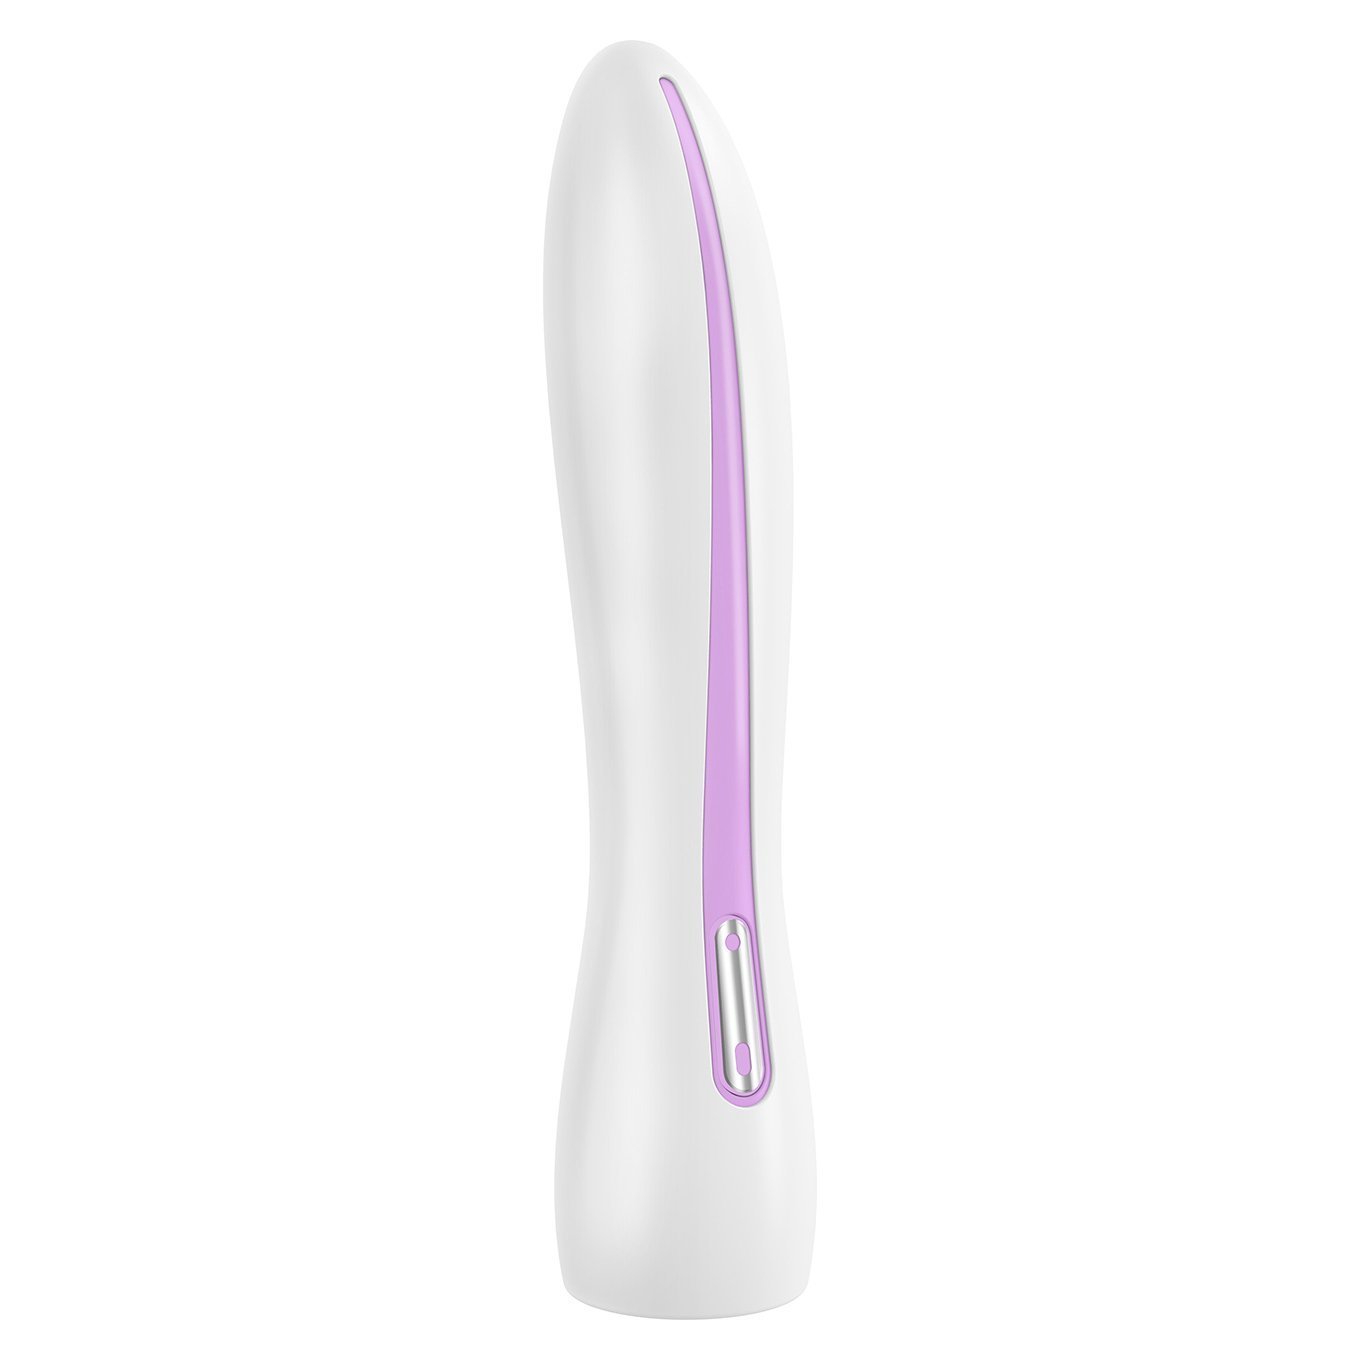 Ovo - F4 Vibrator (White/Pink) -  Non Realistic Dildo w/o suction cup (Vibration) Non Rechargeable  Durio.sg